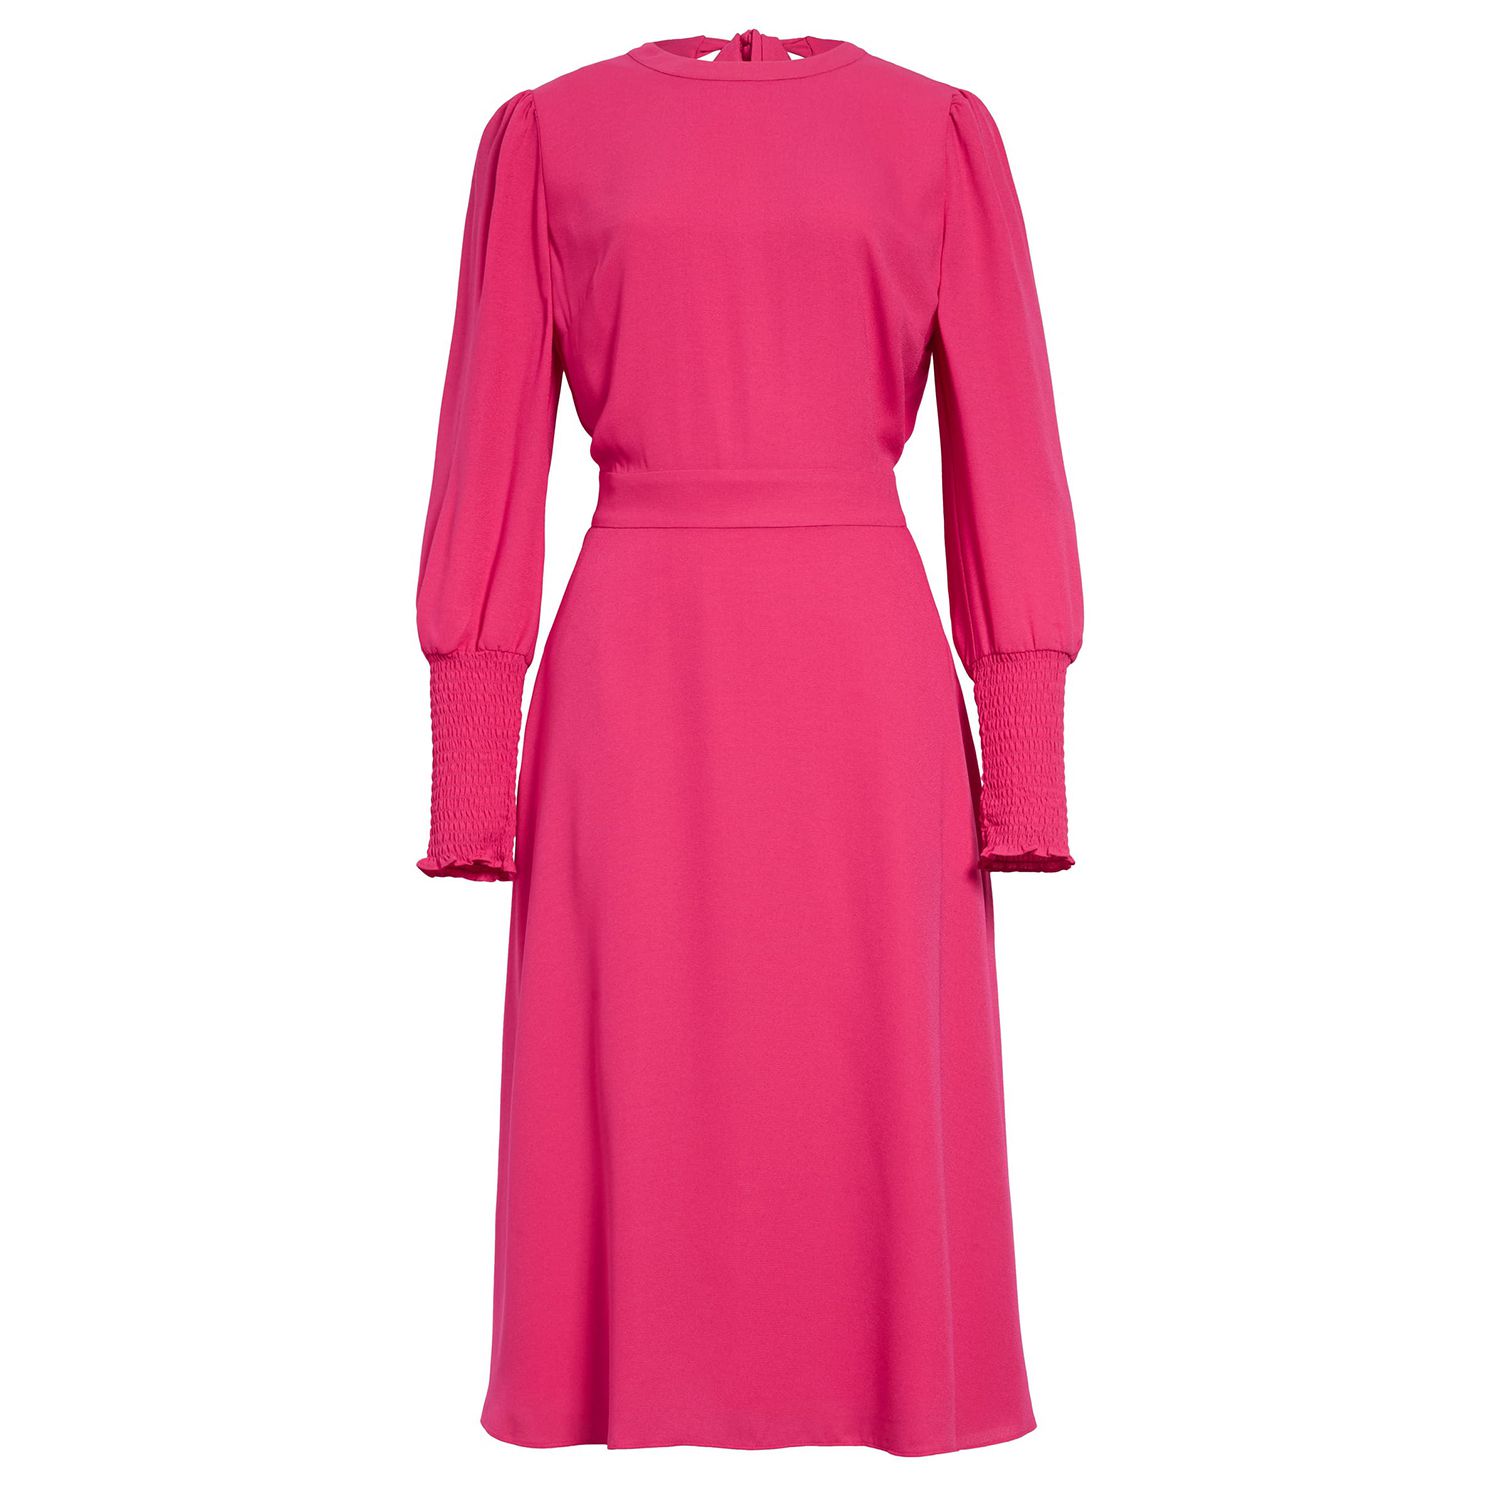 Nordstrom Anniversary Sale 2020: Best Dress Deals to Shop | PEOPLE.com